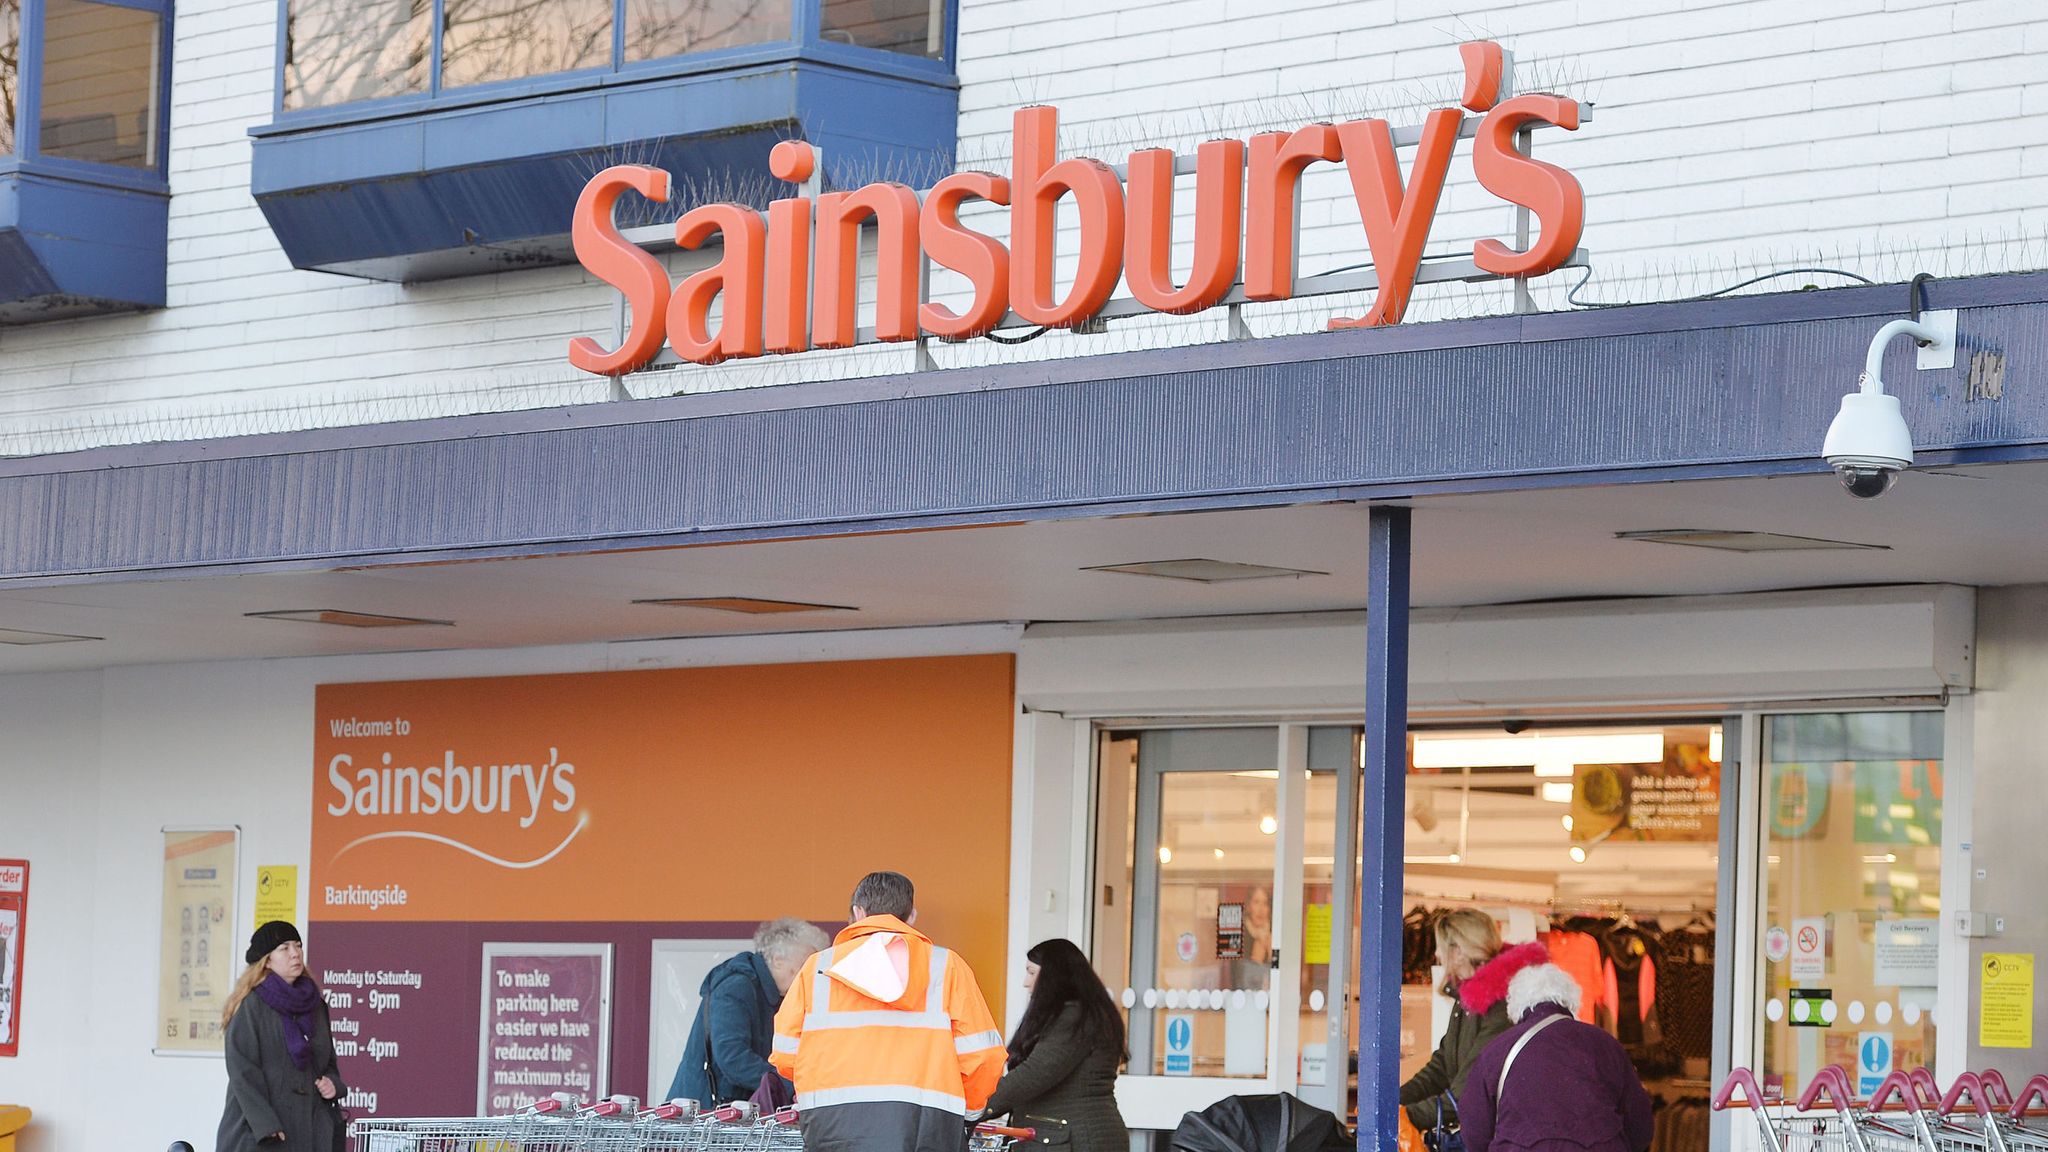 Buy shares in sainsburys forex advisors advice